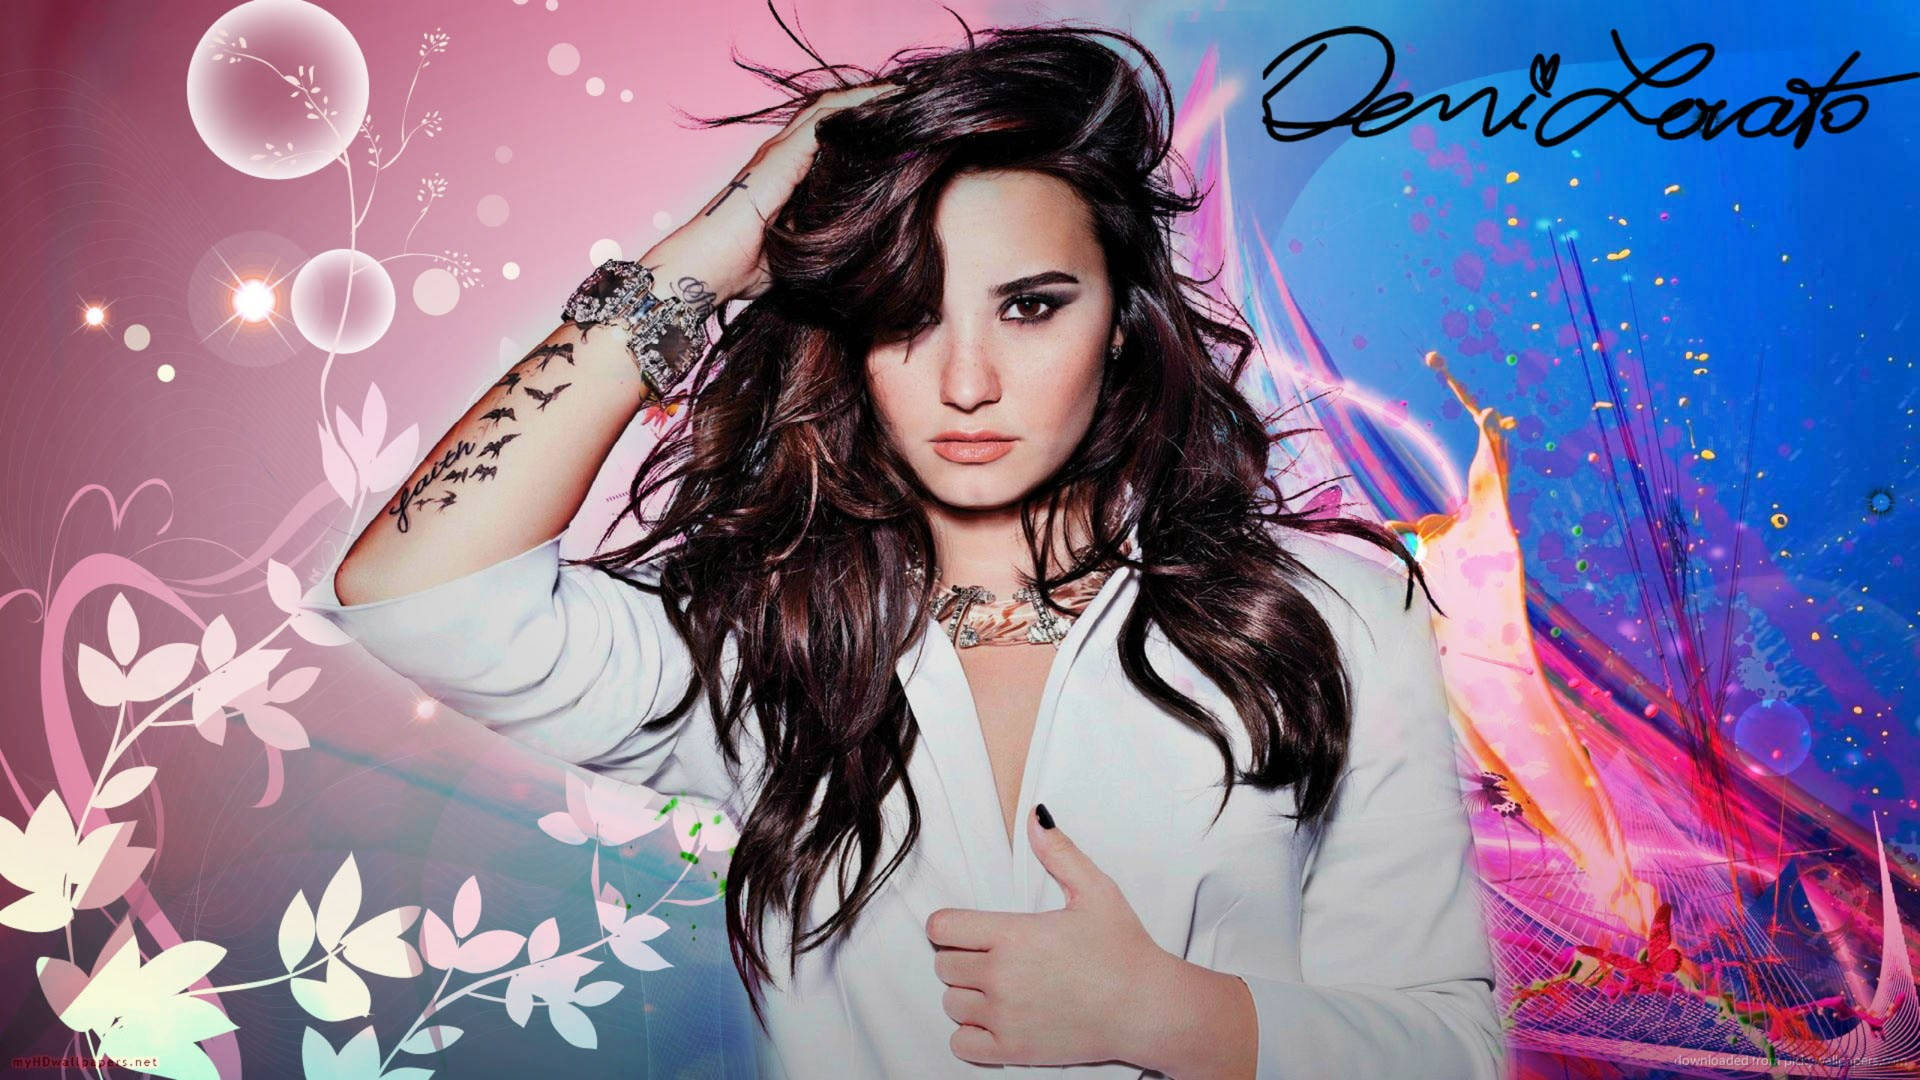 Demi Lovato Digital Art Wallpaper